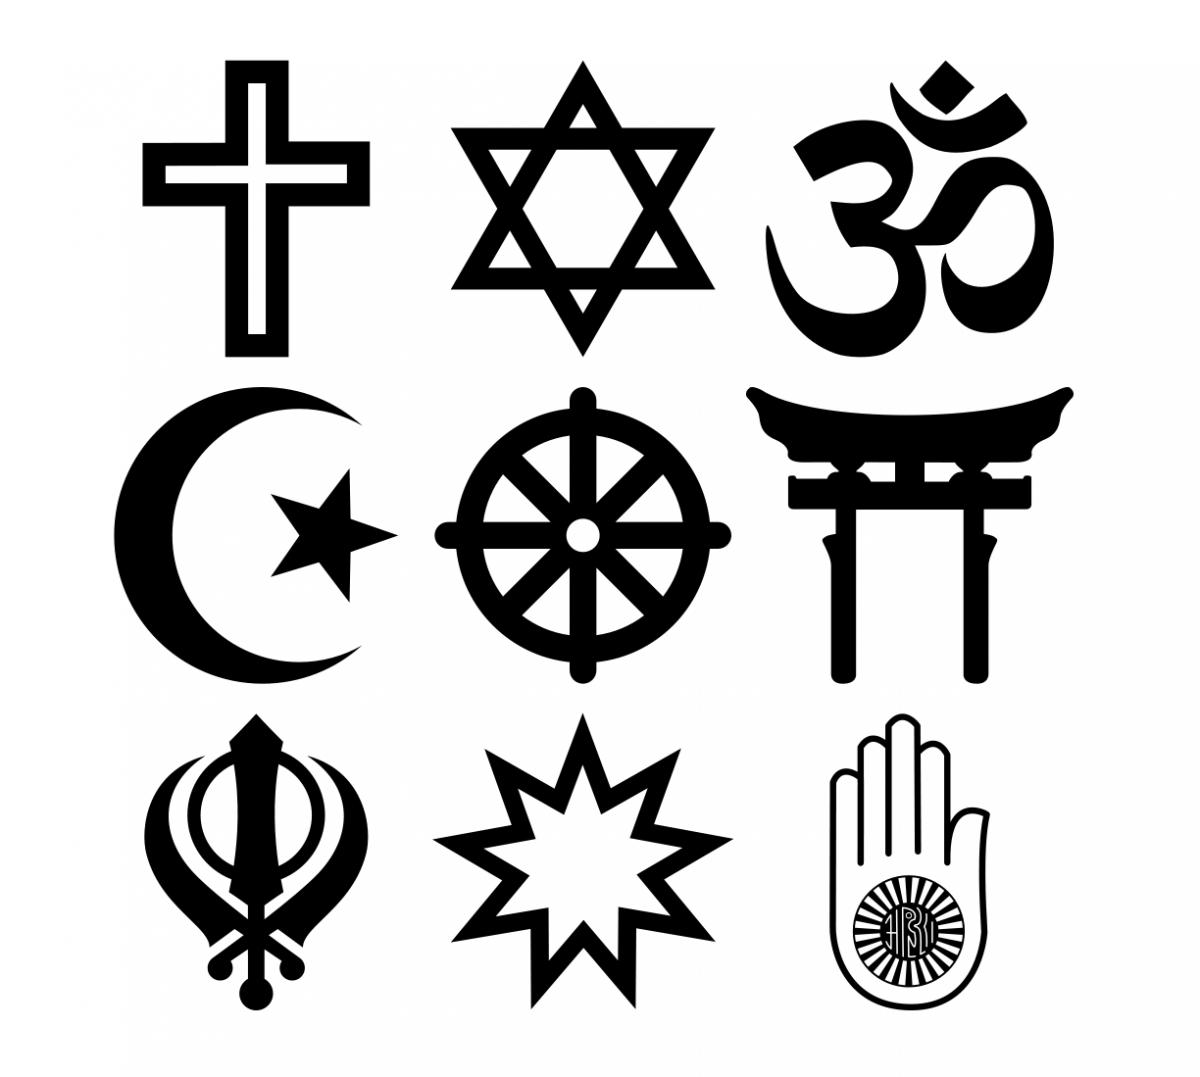 Freemasonry is not a religion